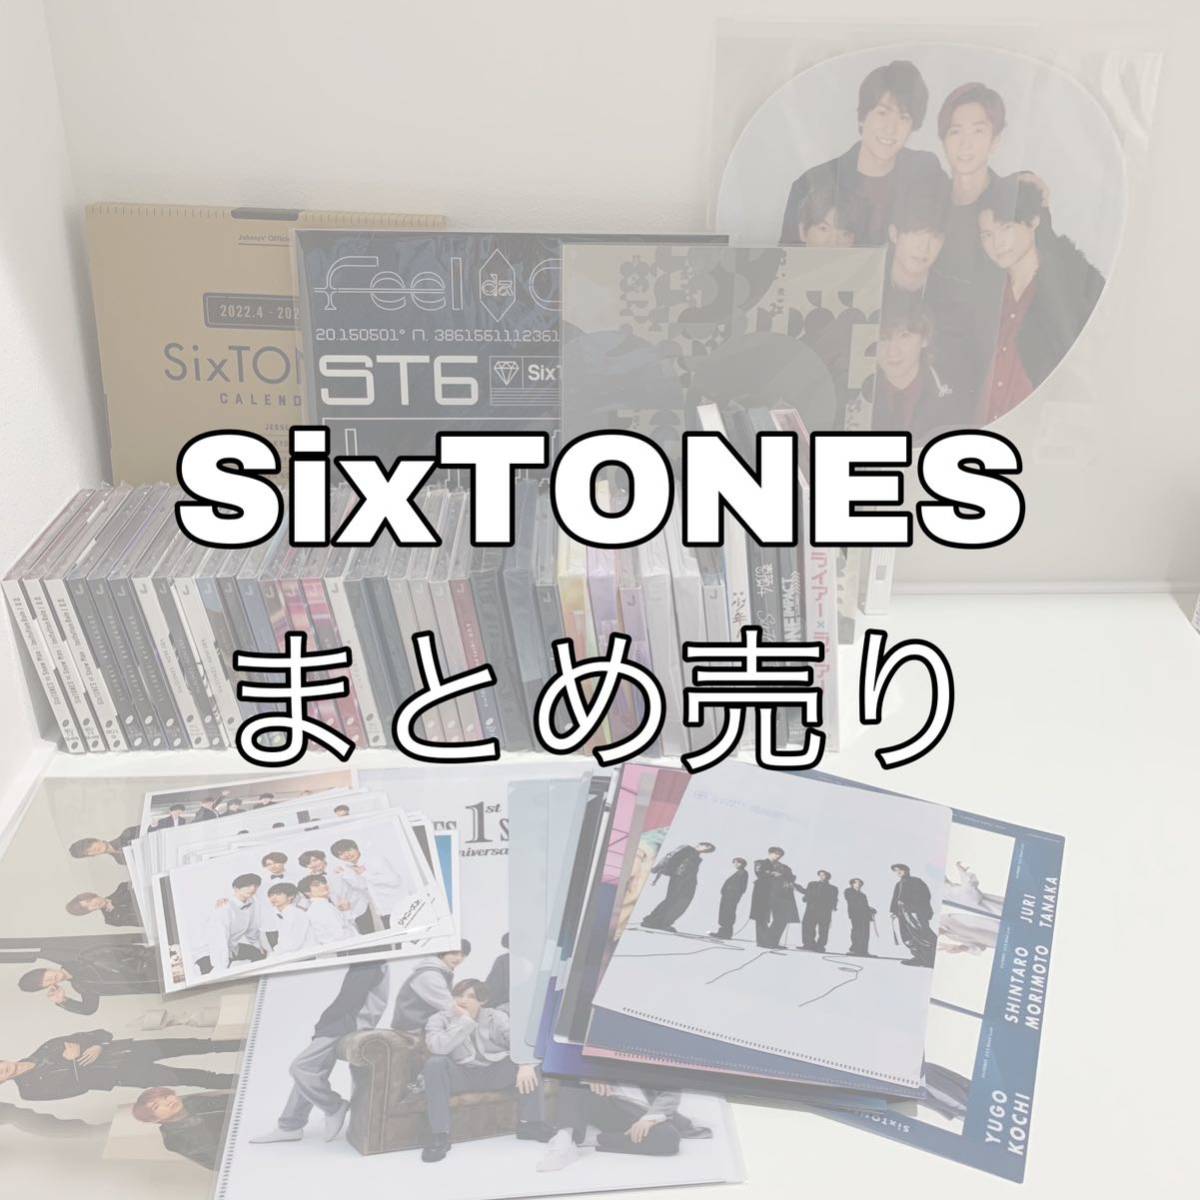 SixTONES ストーンズ まとめ売り CD DVD Blu-ray 公式写真 グッズ